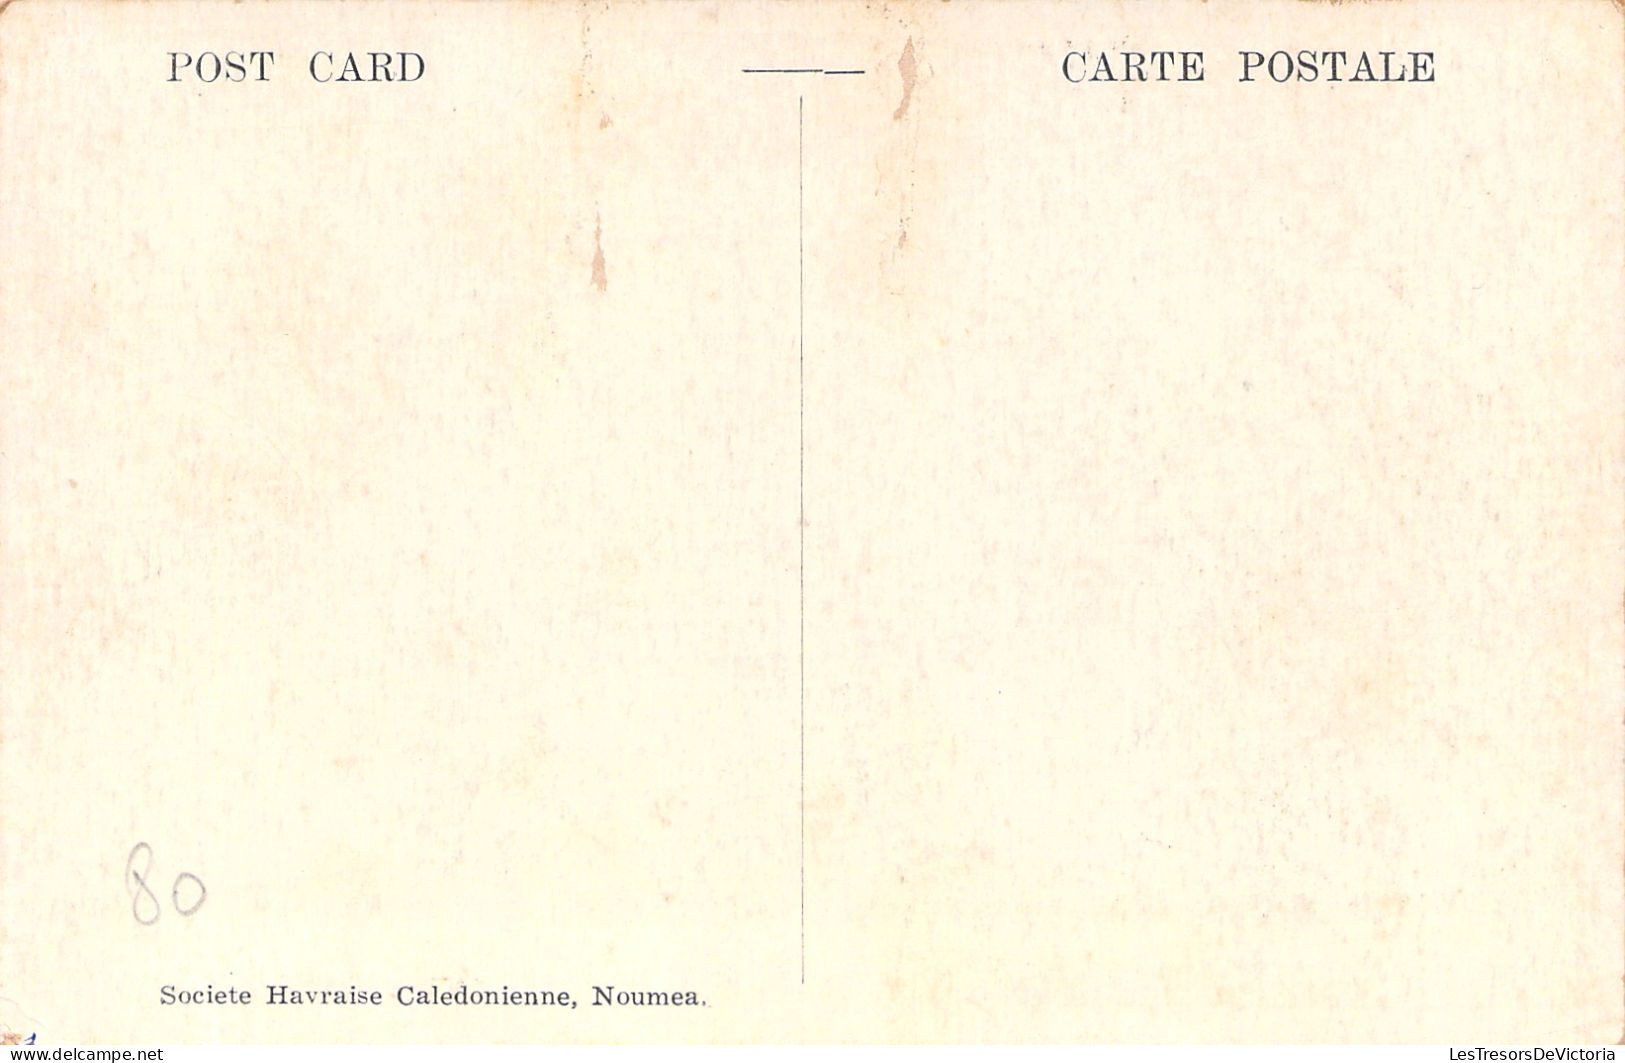 Nouvelle Calédonie  - New Caledonia - Voiture A Boeufs - Bullock Cart - Carte Postale Ancienne - Nueva Caledonia